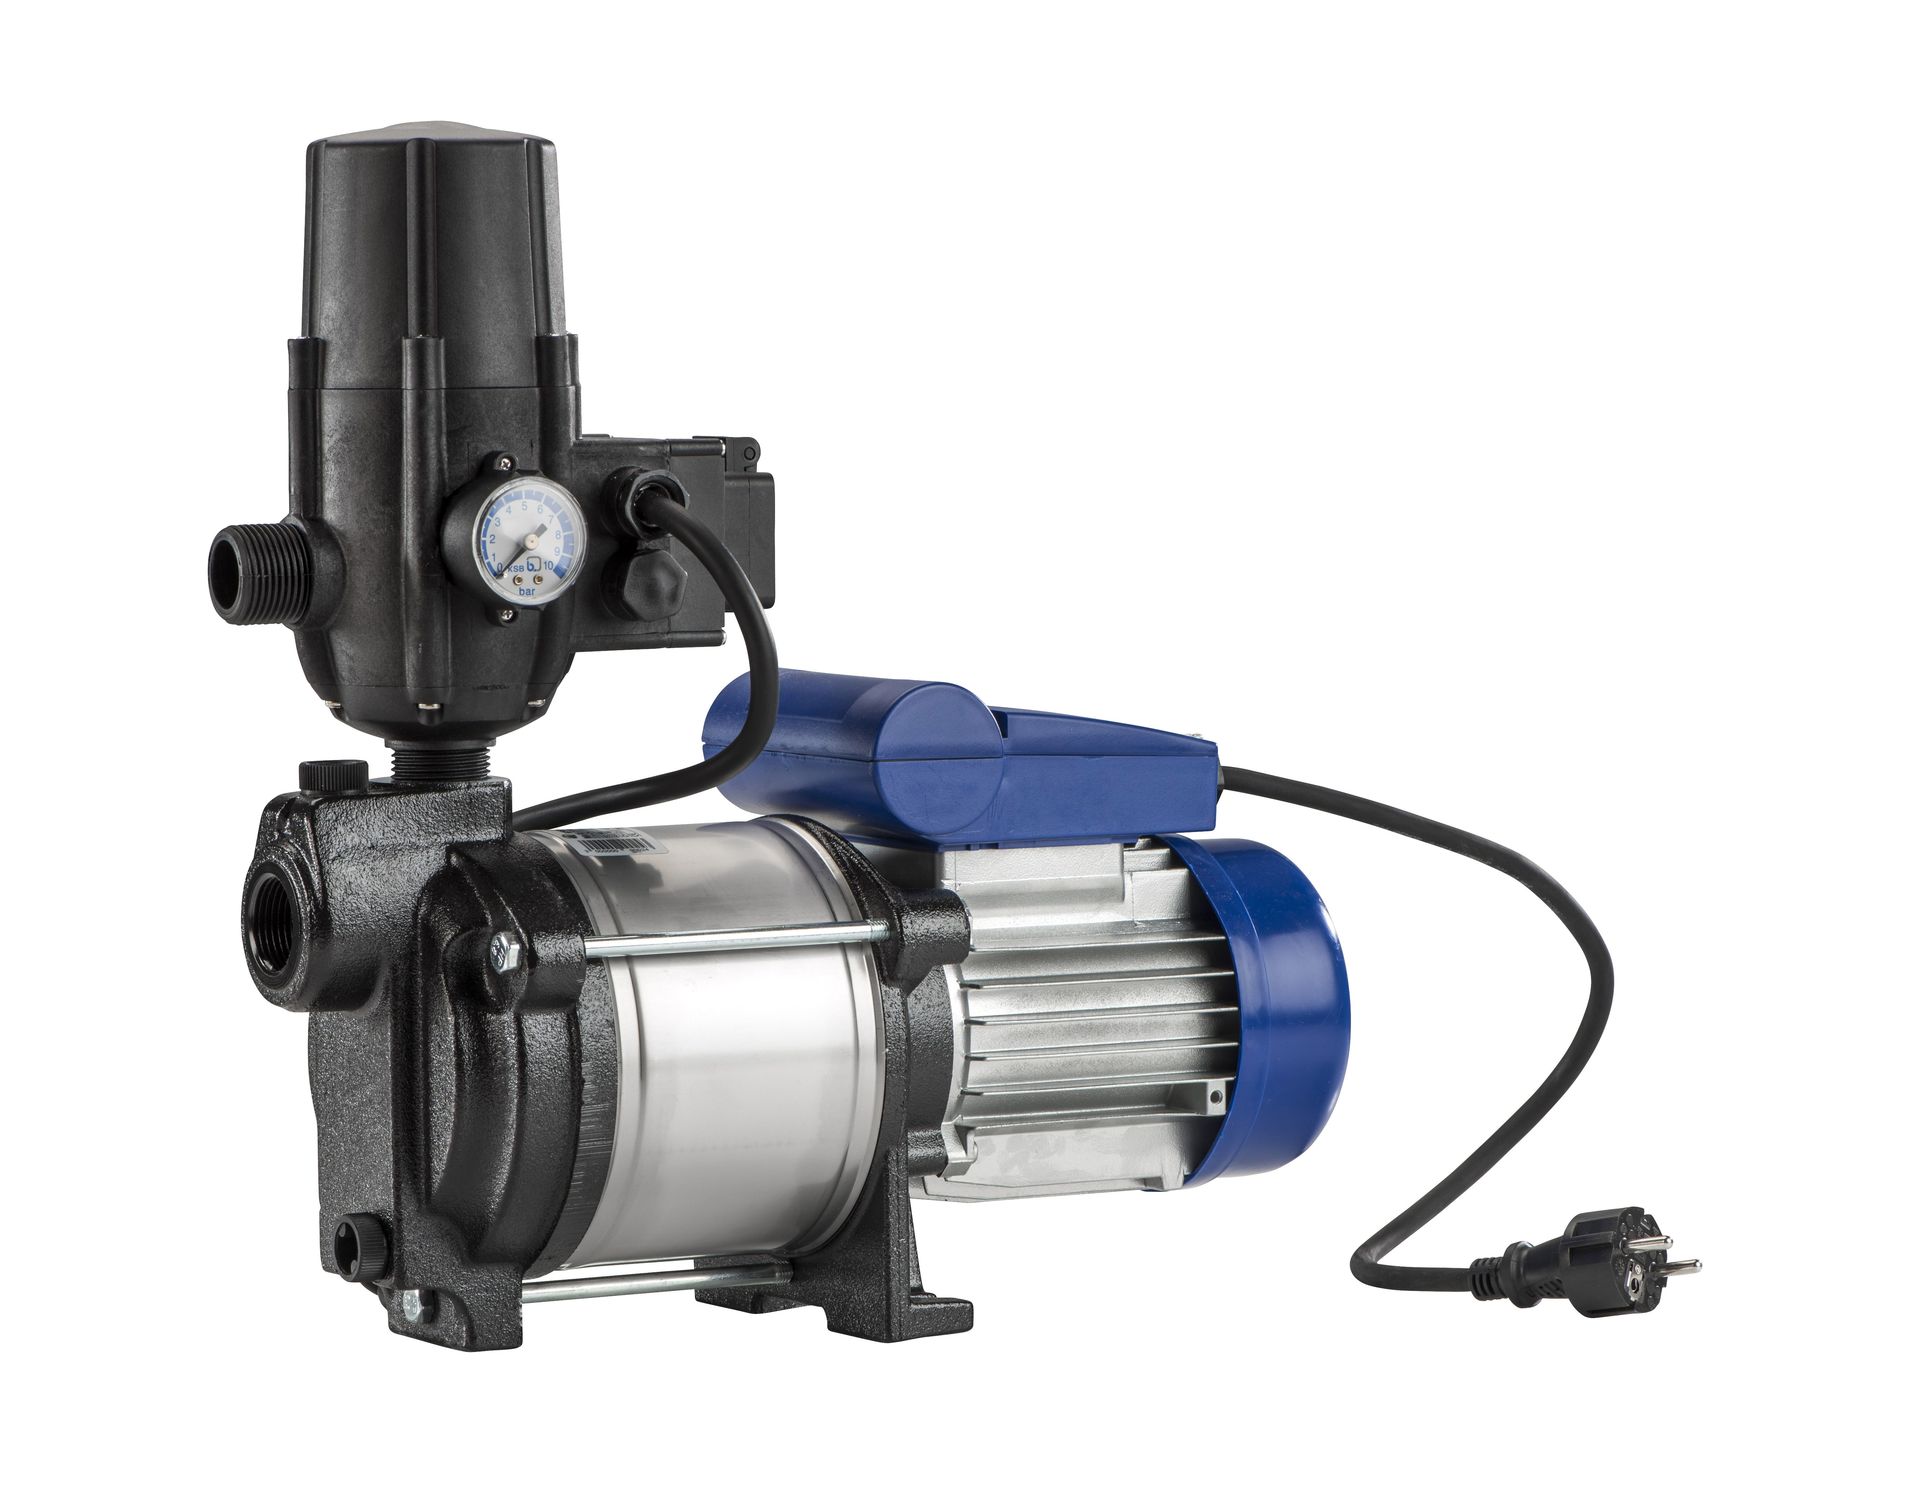 KSB Hauswasserwerk Pumpe Multi Eco-Pro 34E 230 V mit Schaltautomat CM E